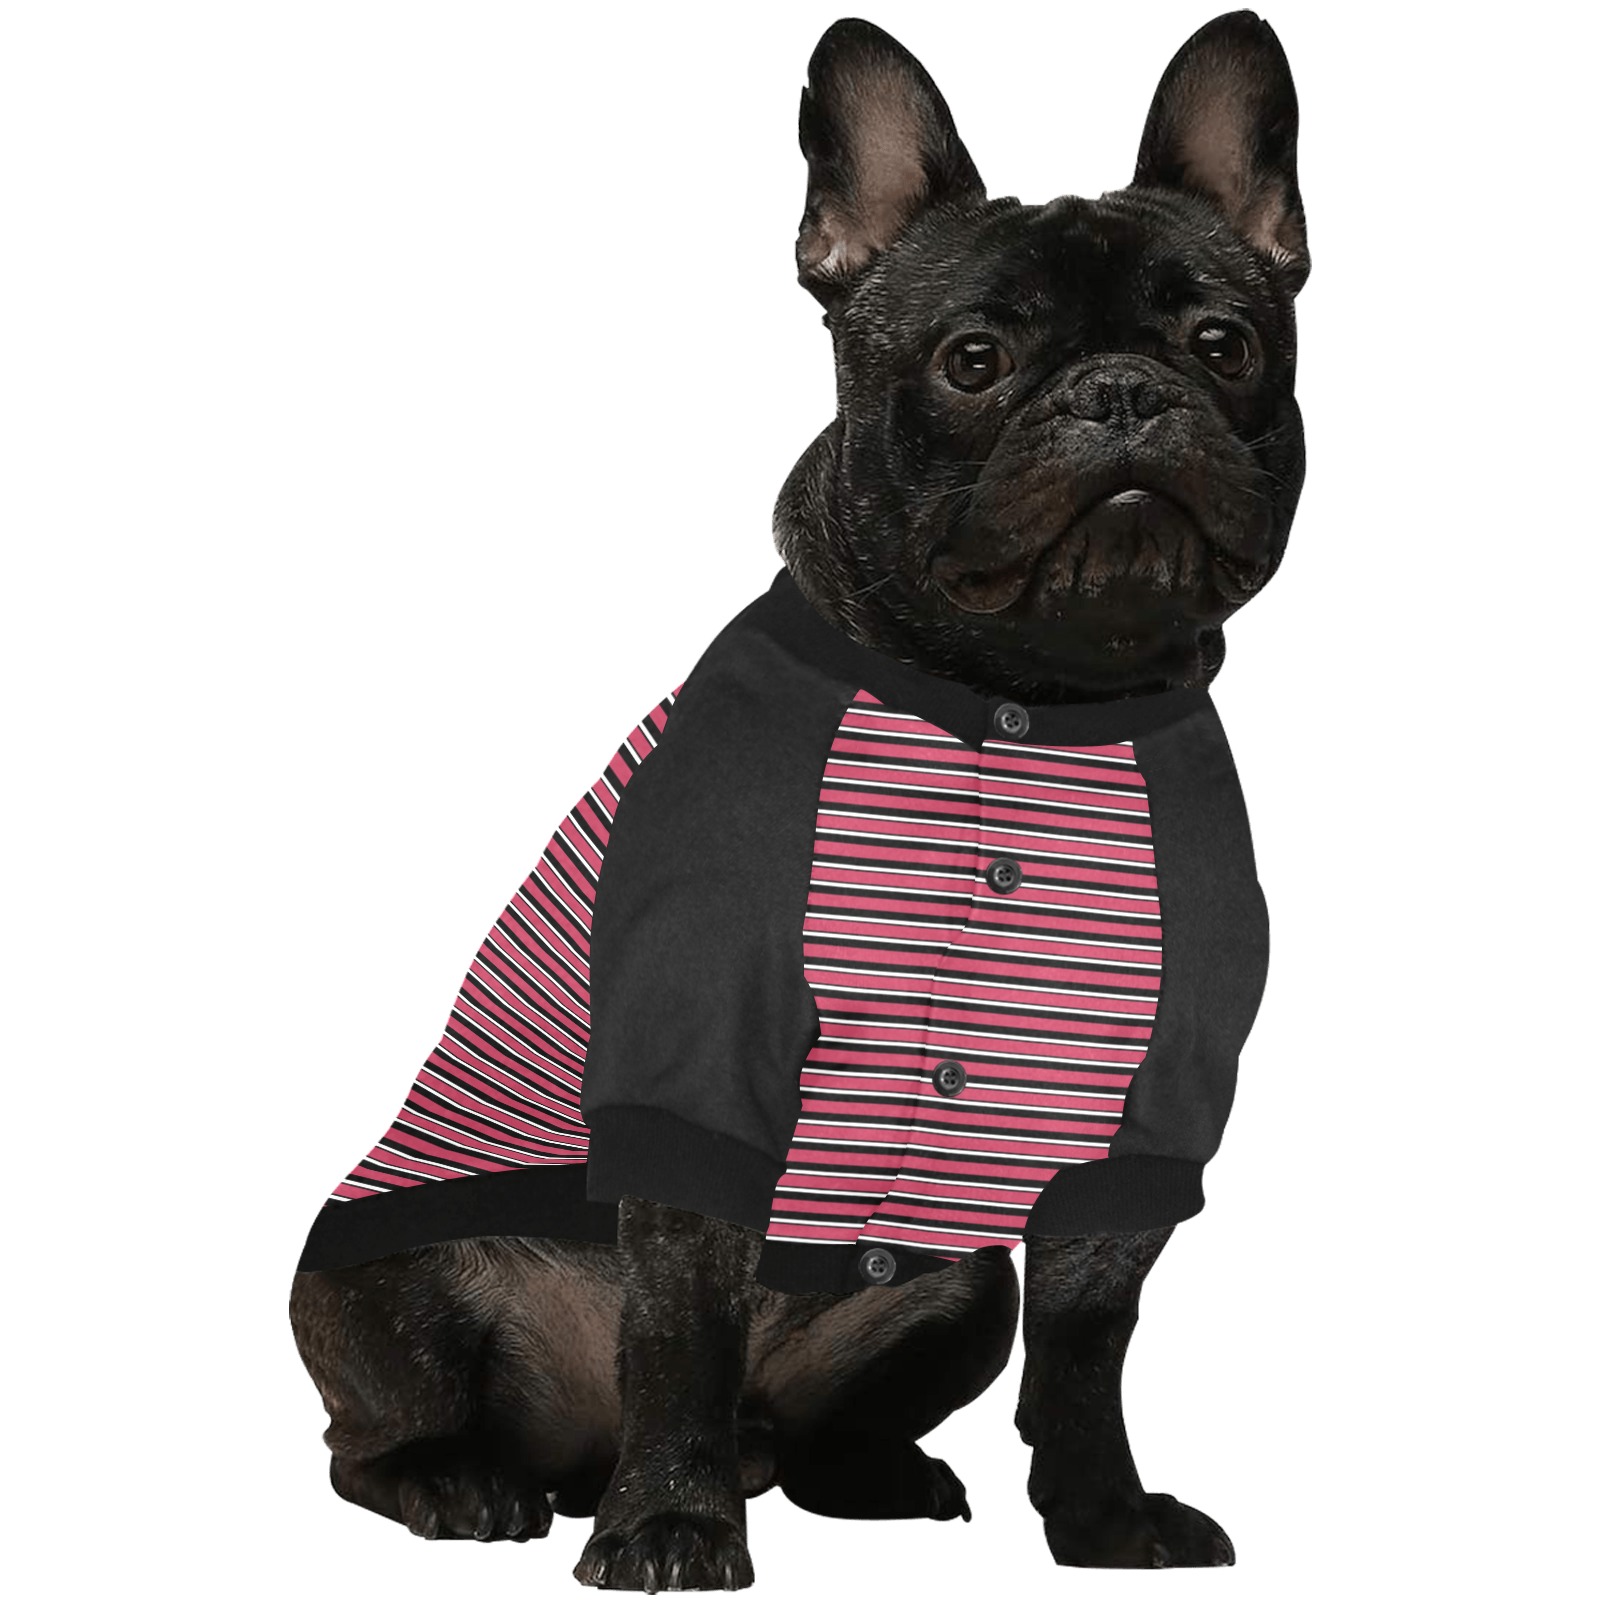 Magenta, Black and White Stripes Pet Dog Round Neck Shirt